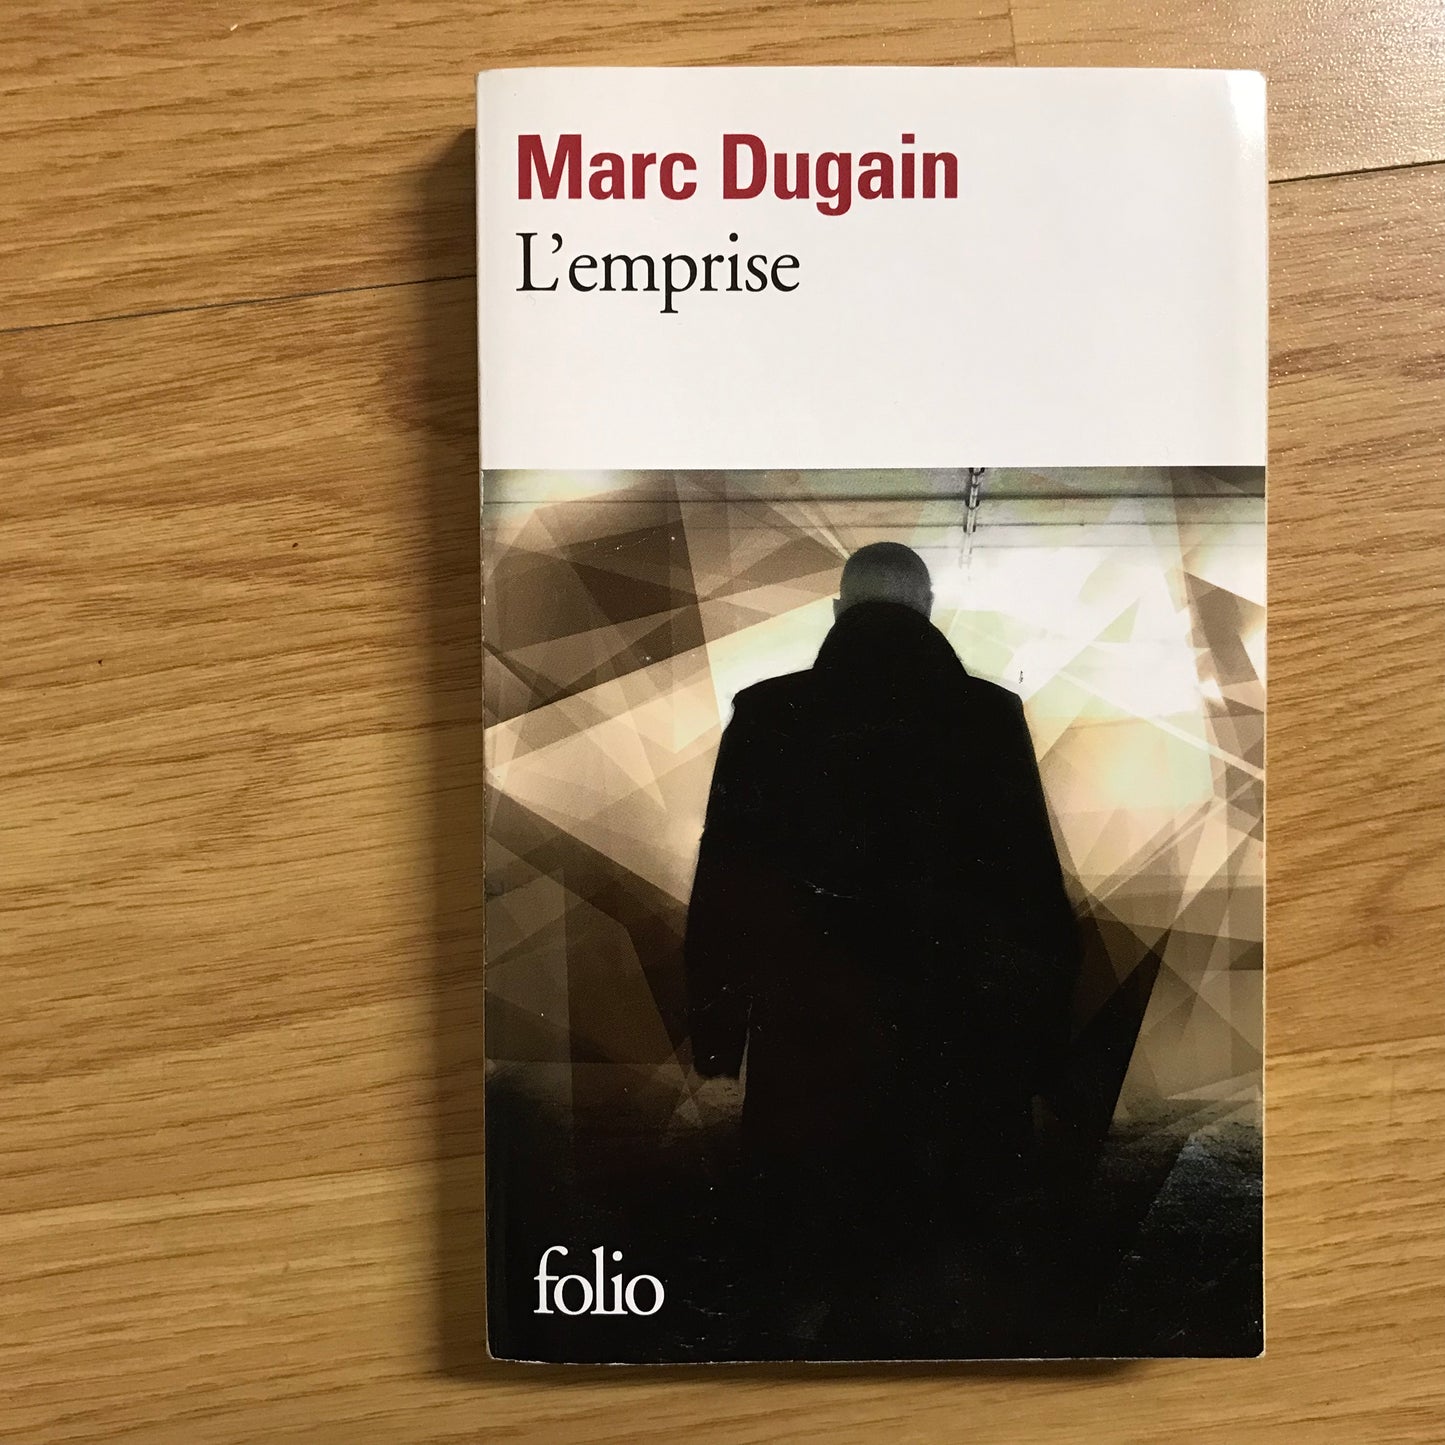 Dugain, Marc - L ‘emprise